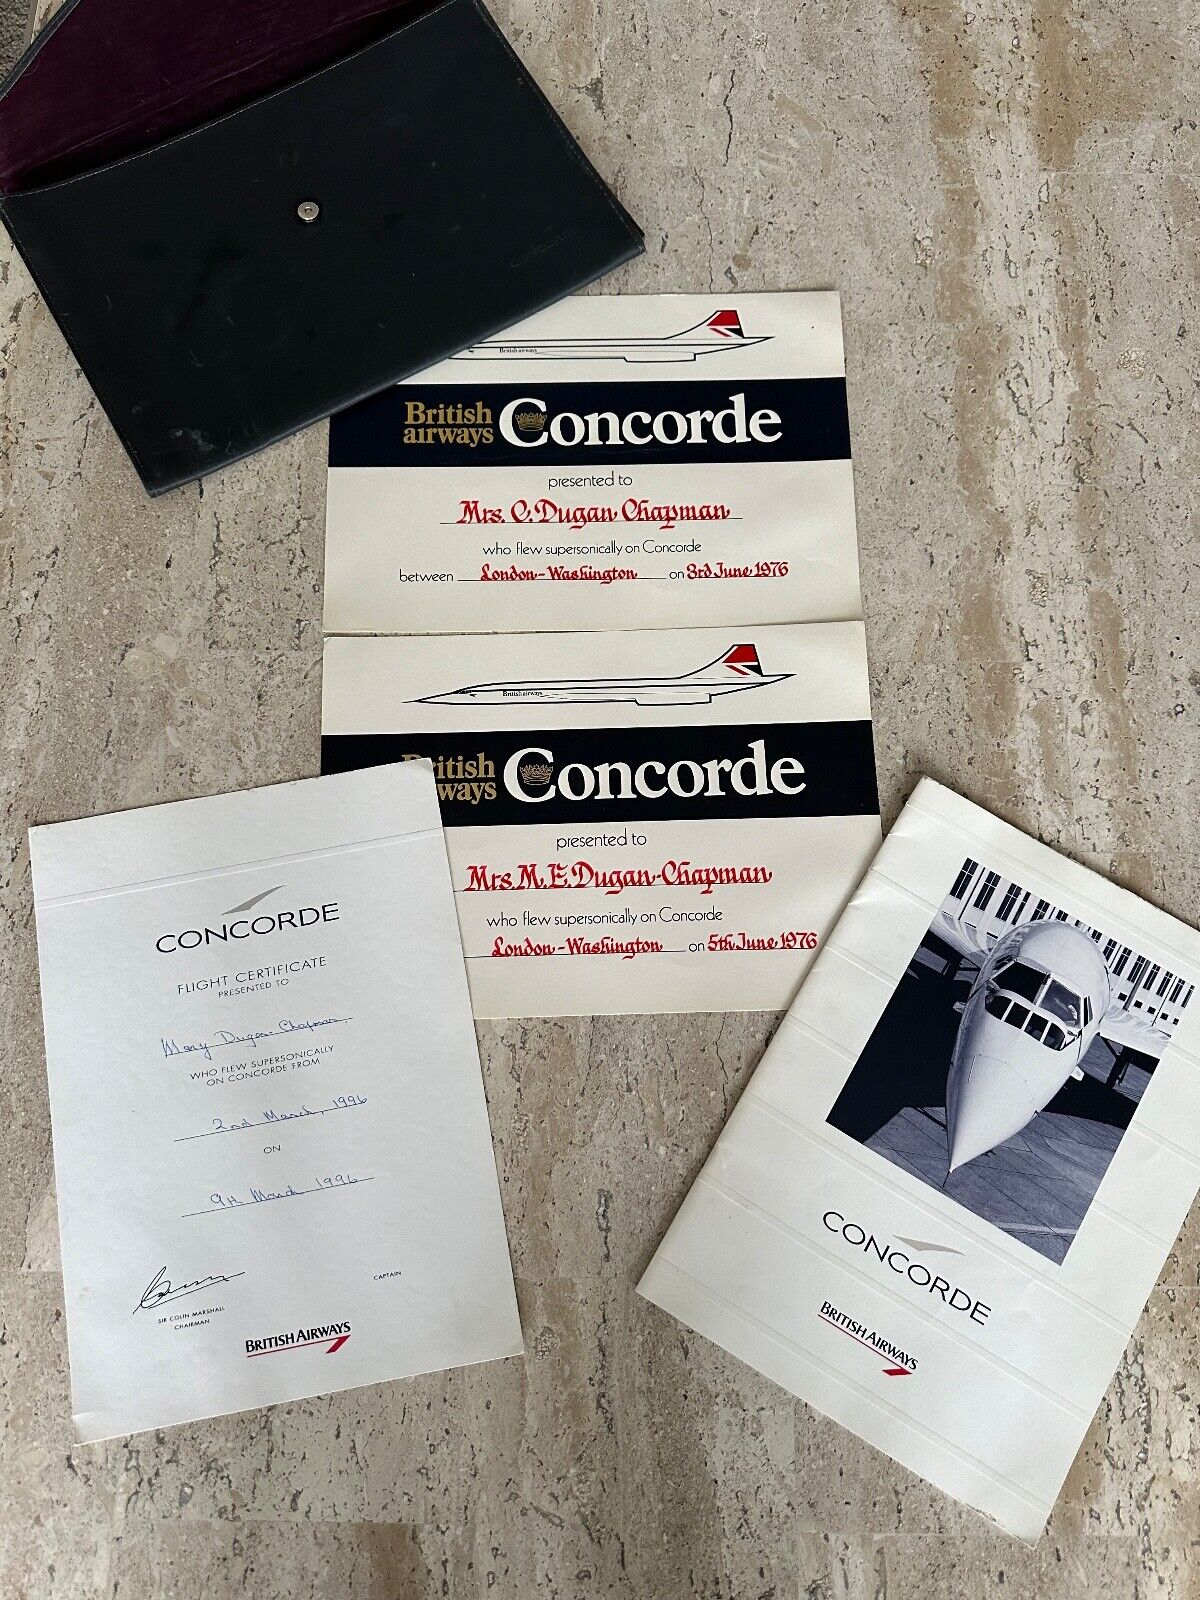 3 Concorde British Airways flight certificates. London- Washington 1976